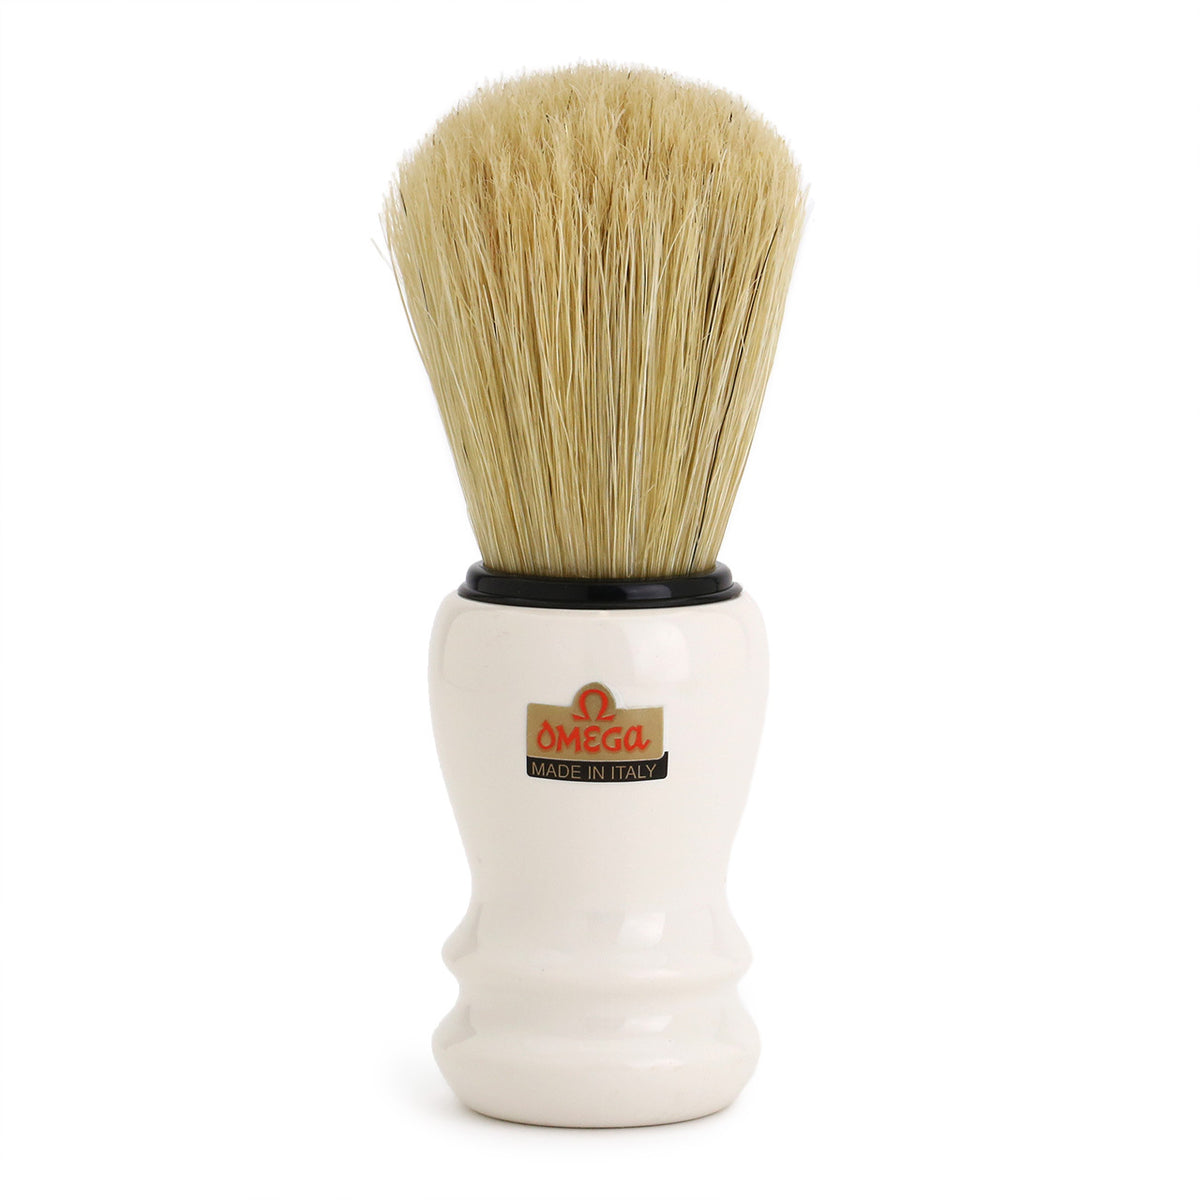 Omega Professional Pure Bristle Shaving Brush 10108 - White